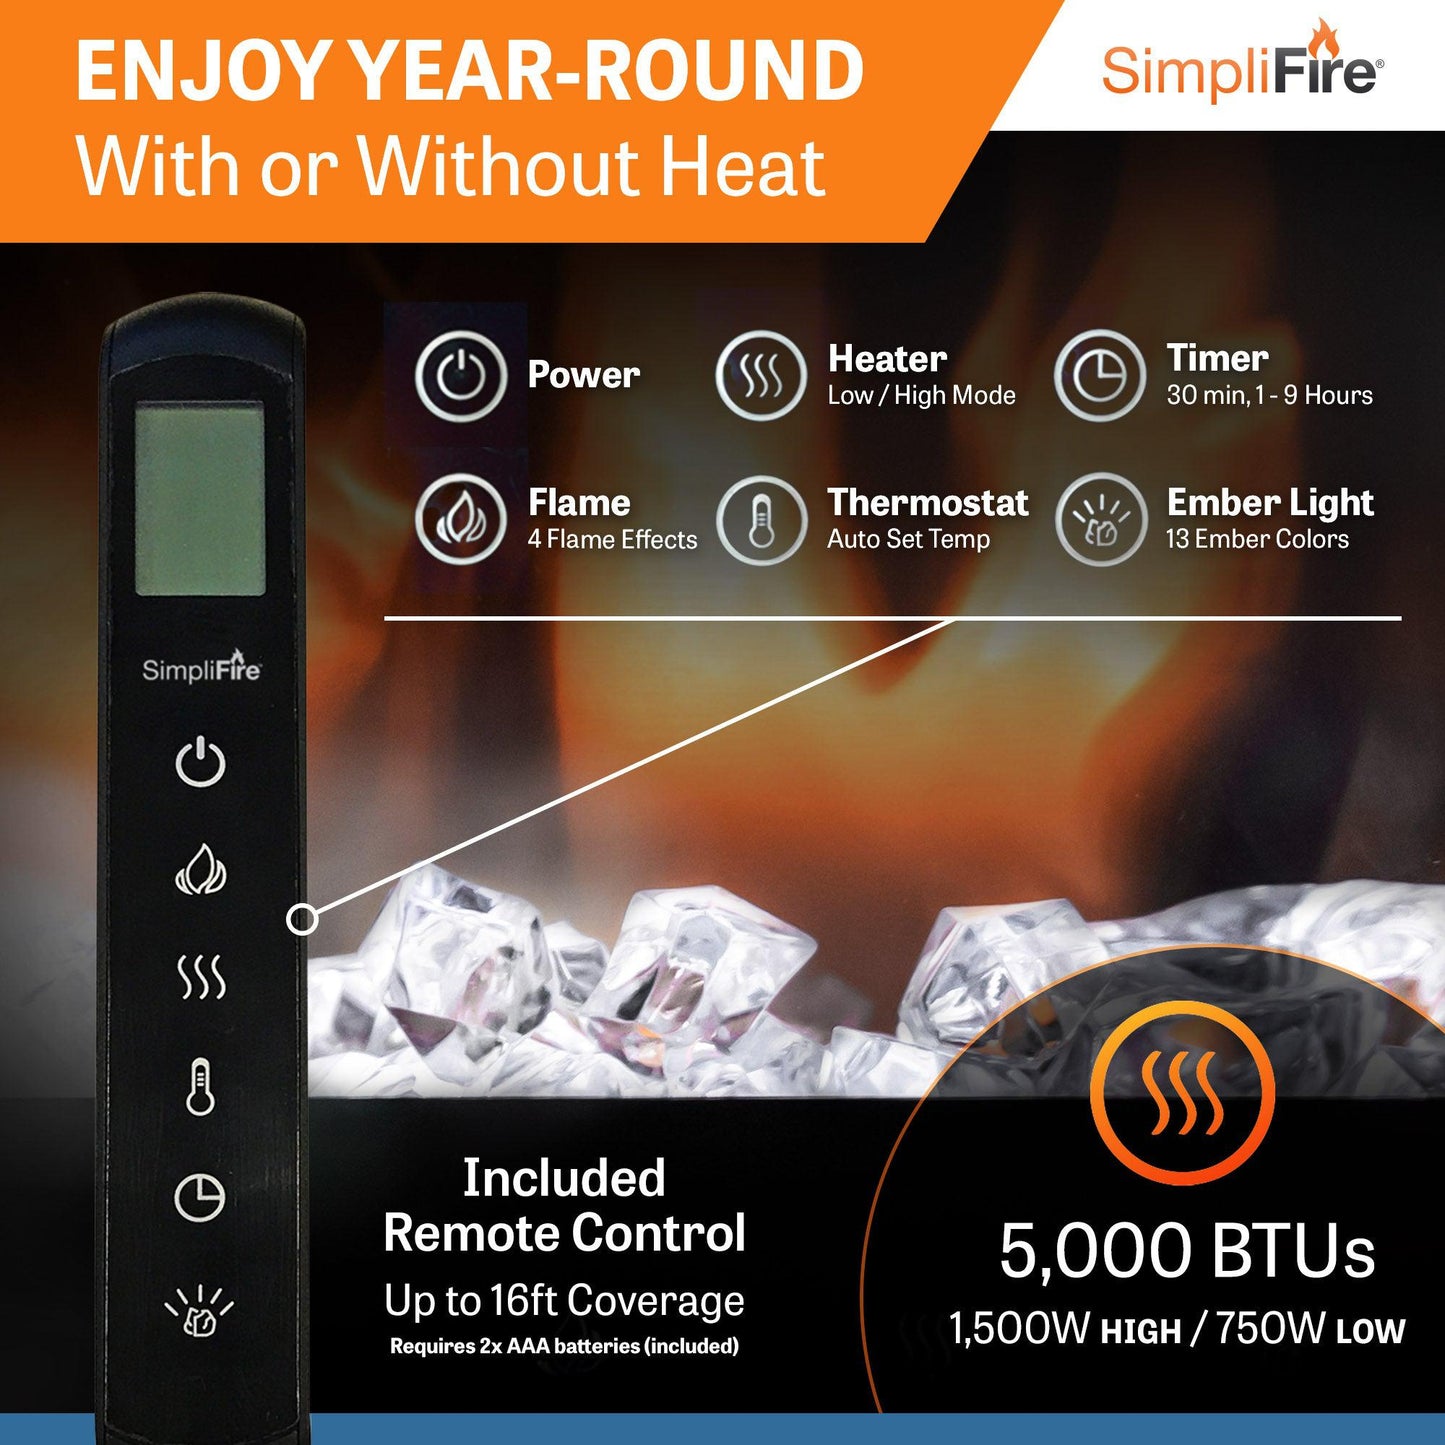 SimpliFire Allusion Platinum 72" Linear Electric Recessed Fireplace